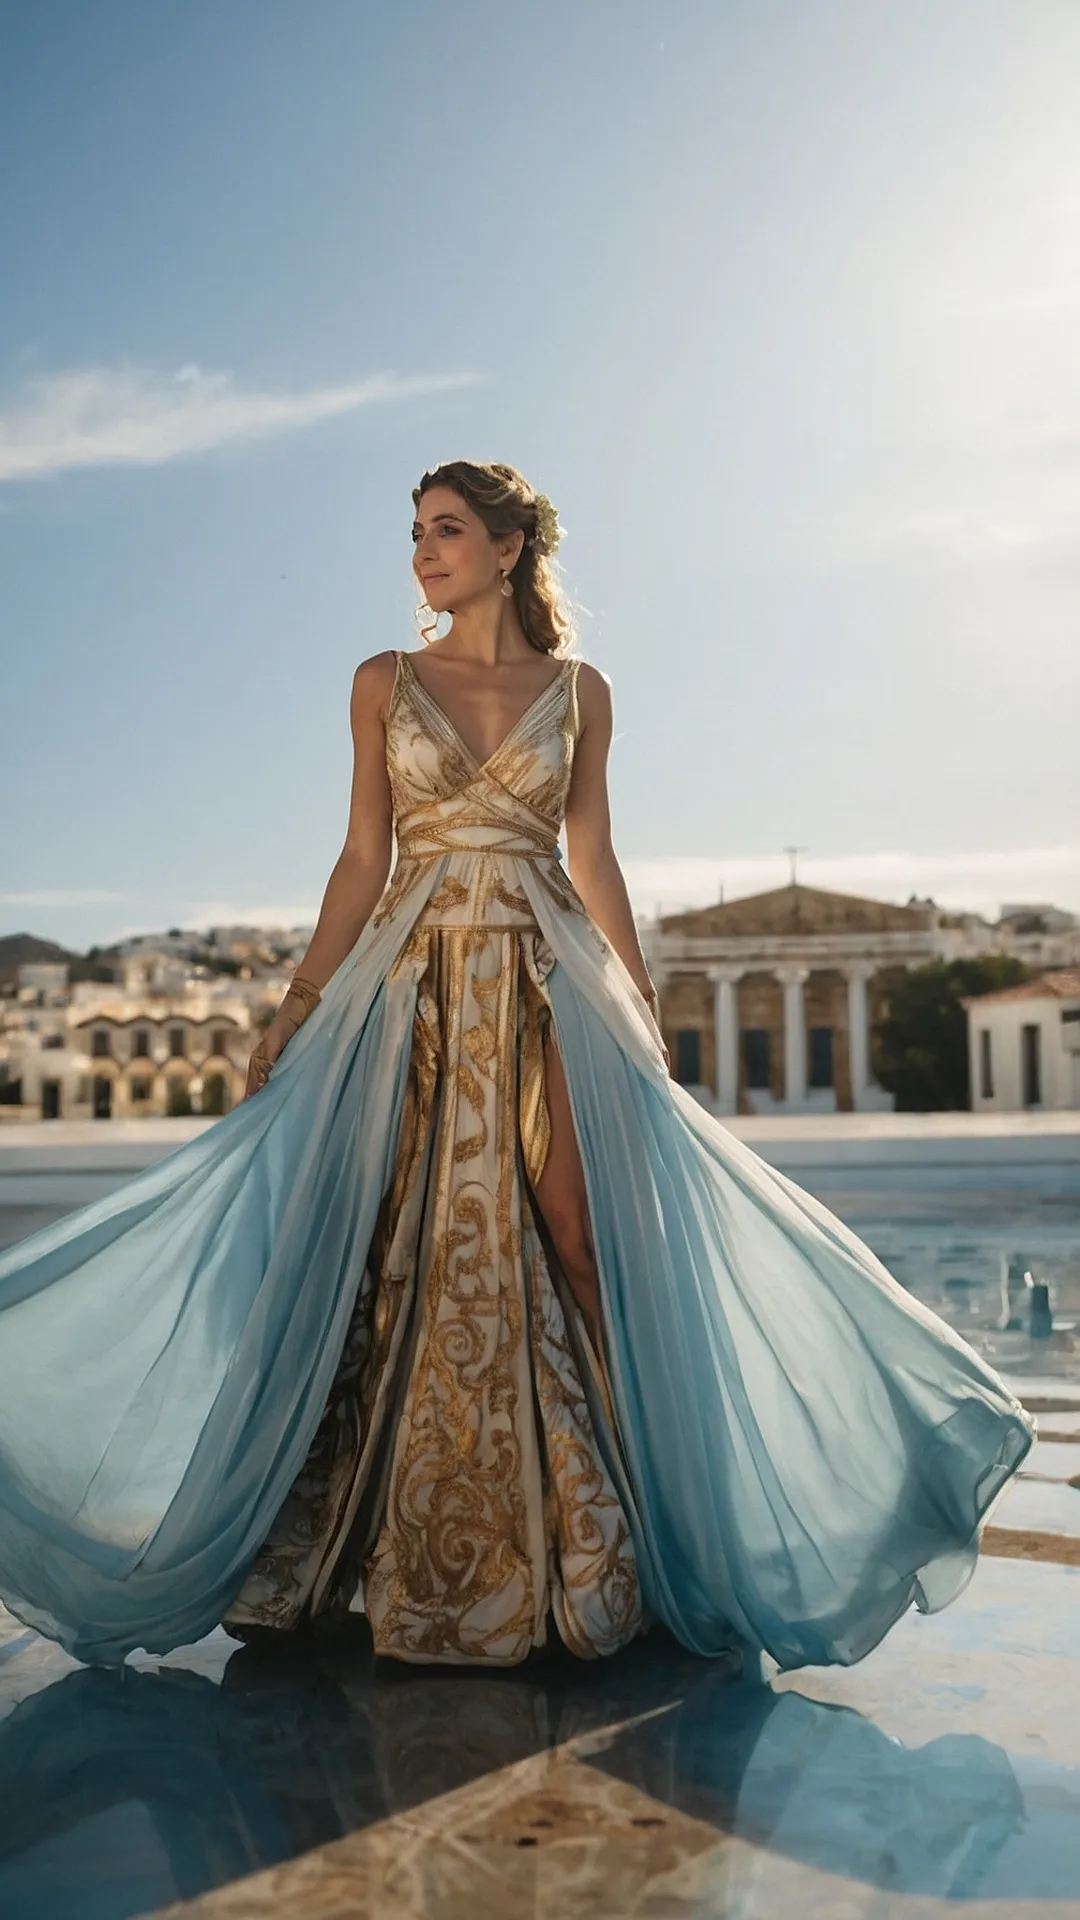 Radiant in Robes: Greek Goddess Inspired Fashion